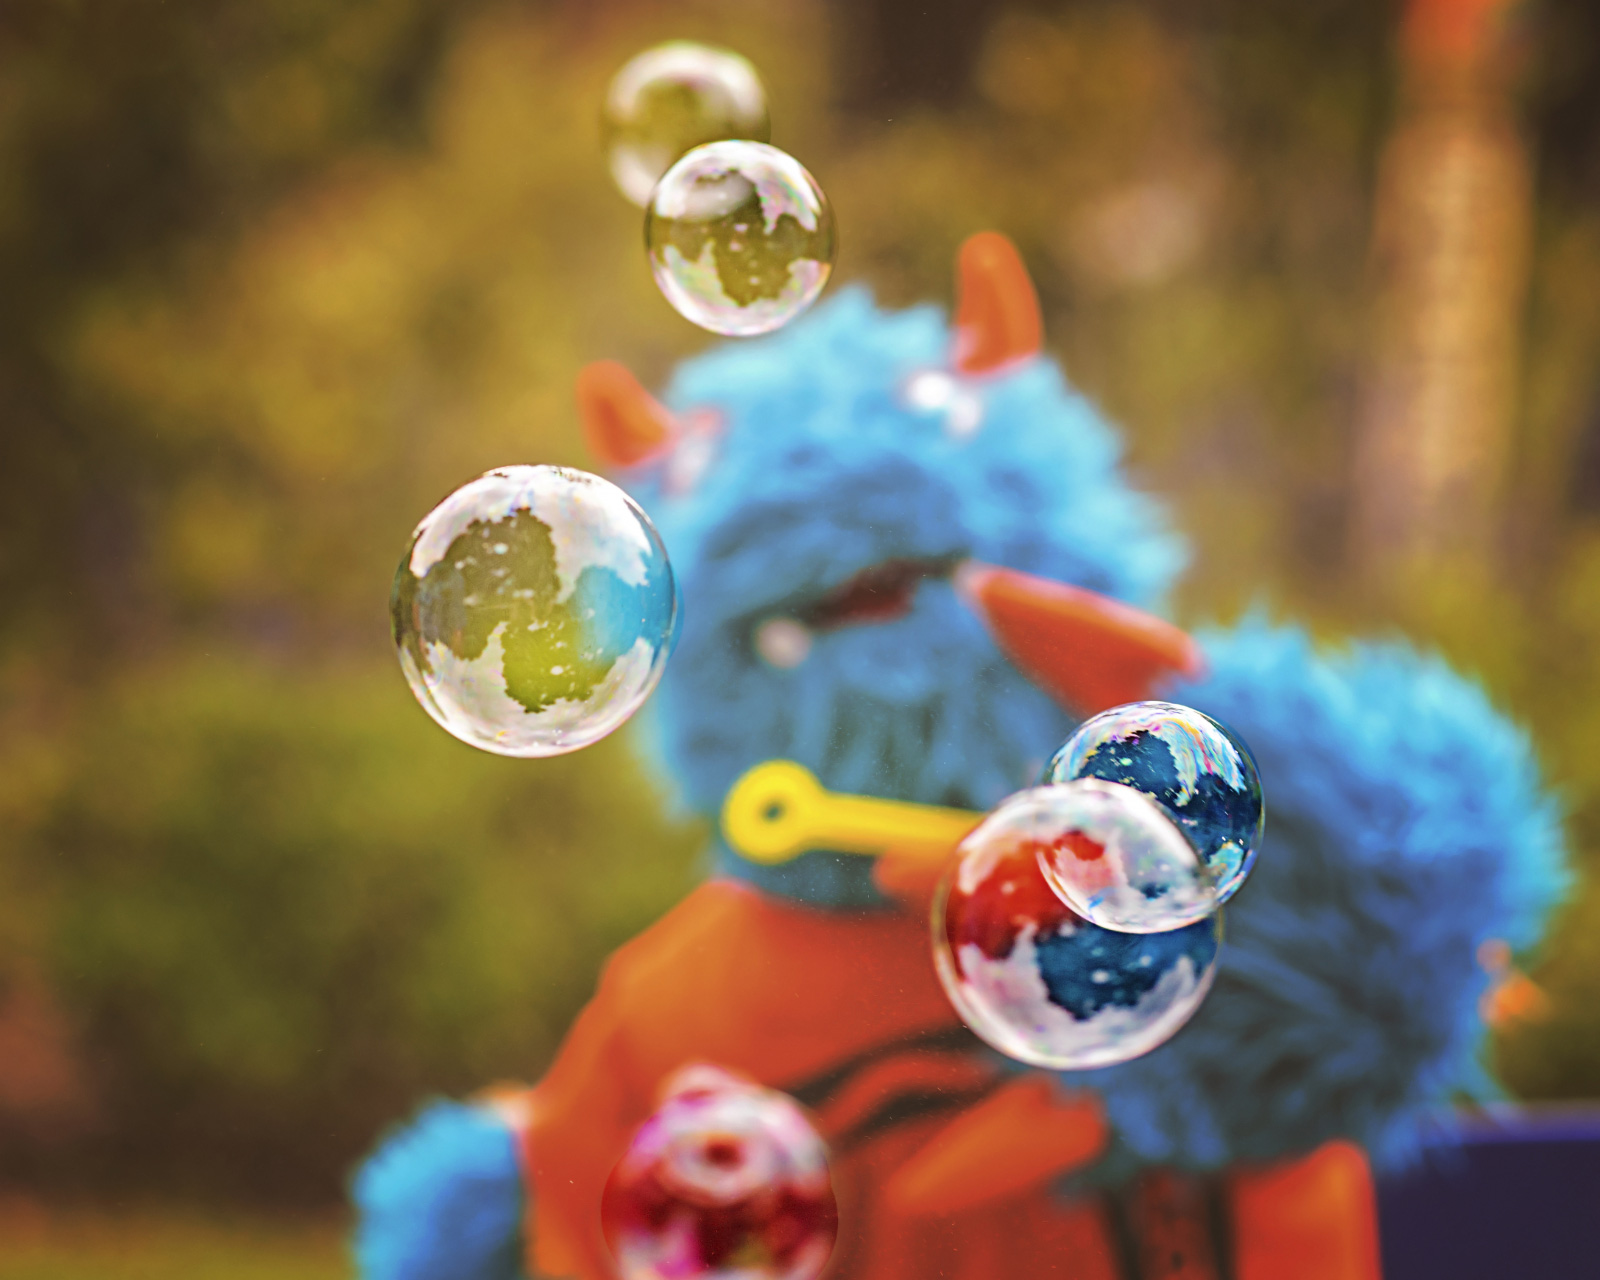 Blueper blowing bubbles